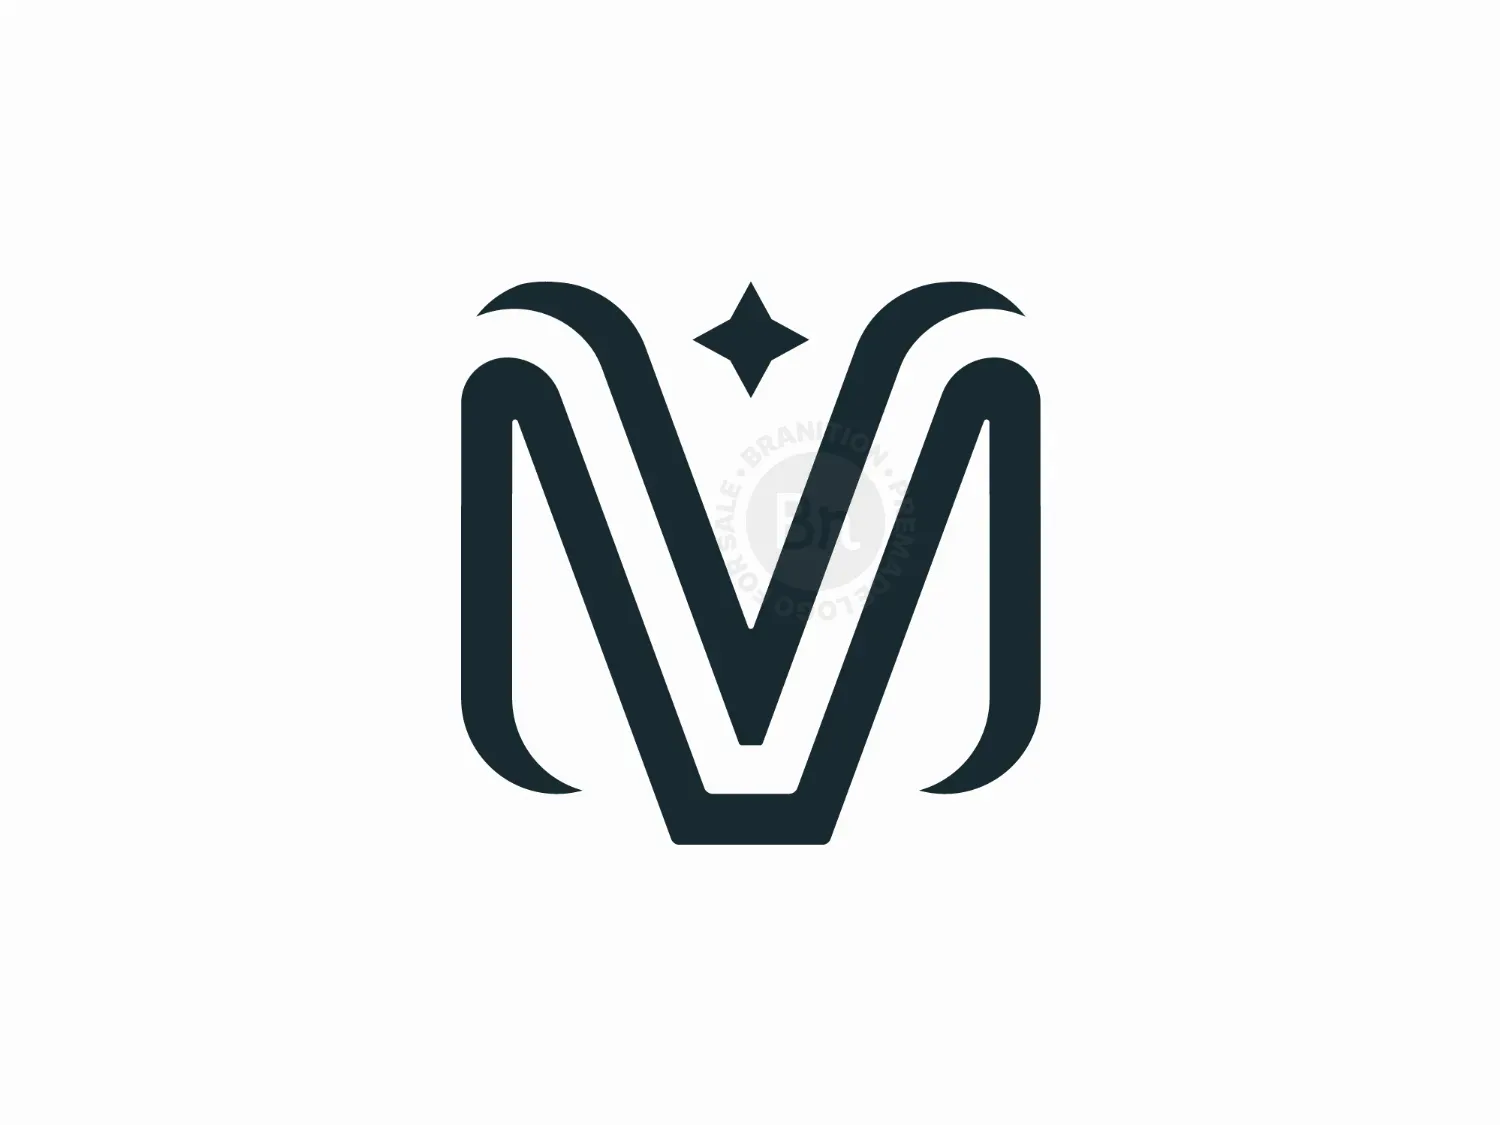 VM Logo Design by Vimiyans creative studio on Dribbble